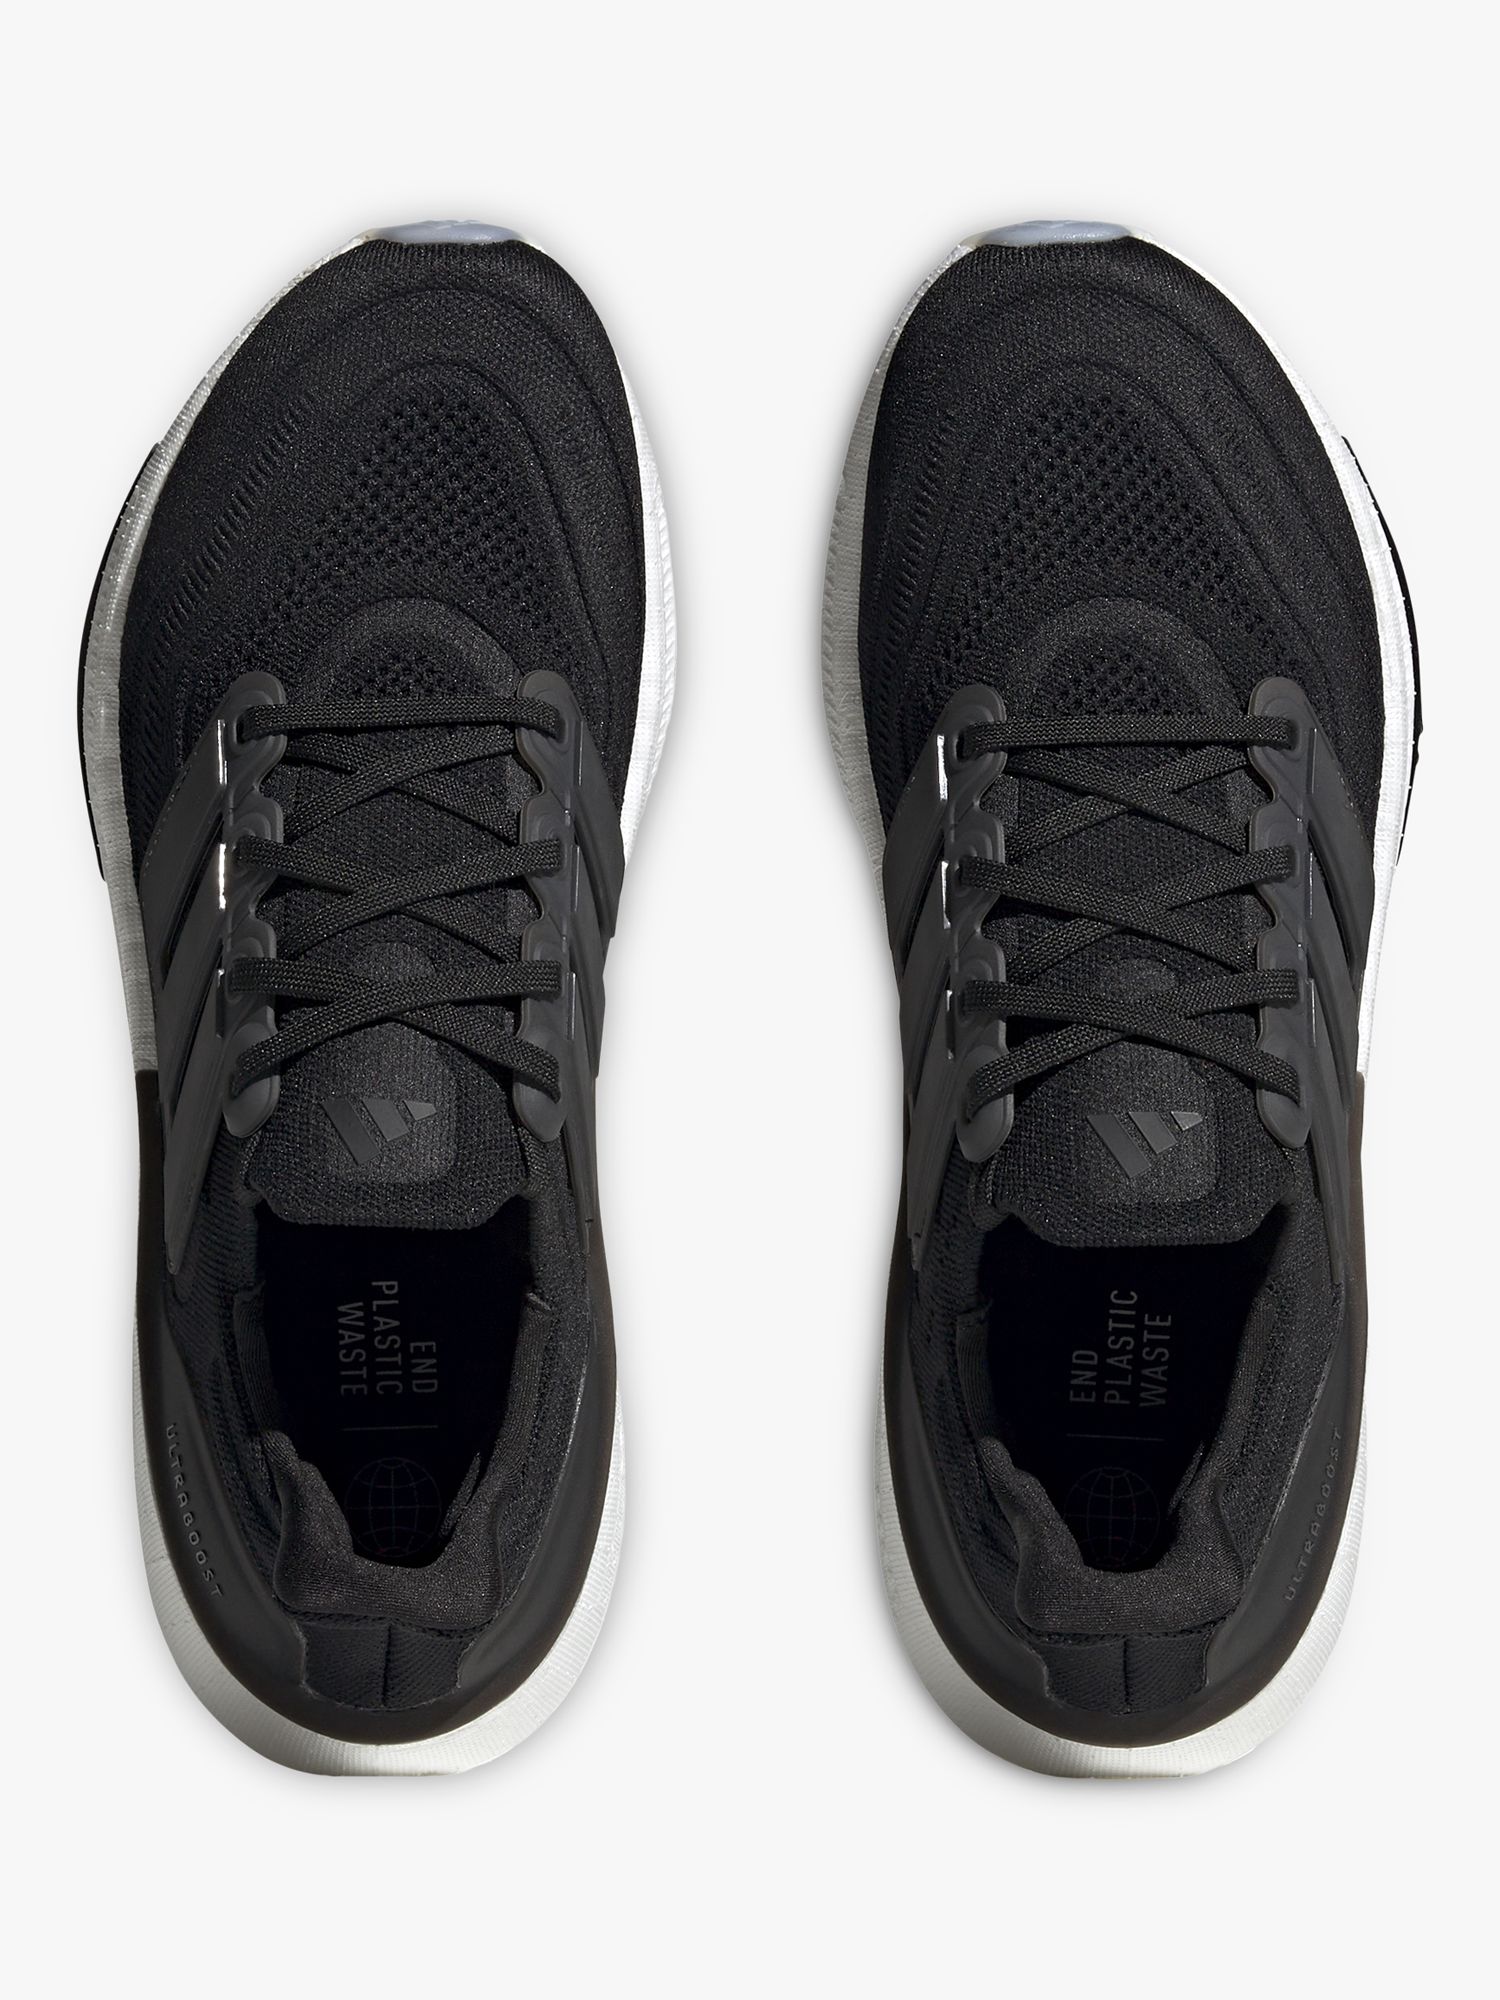 adidas Ultraboost Light Men's Running Shoes, Black/Crystal White at ...